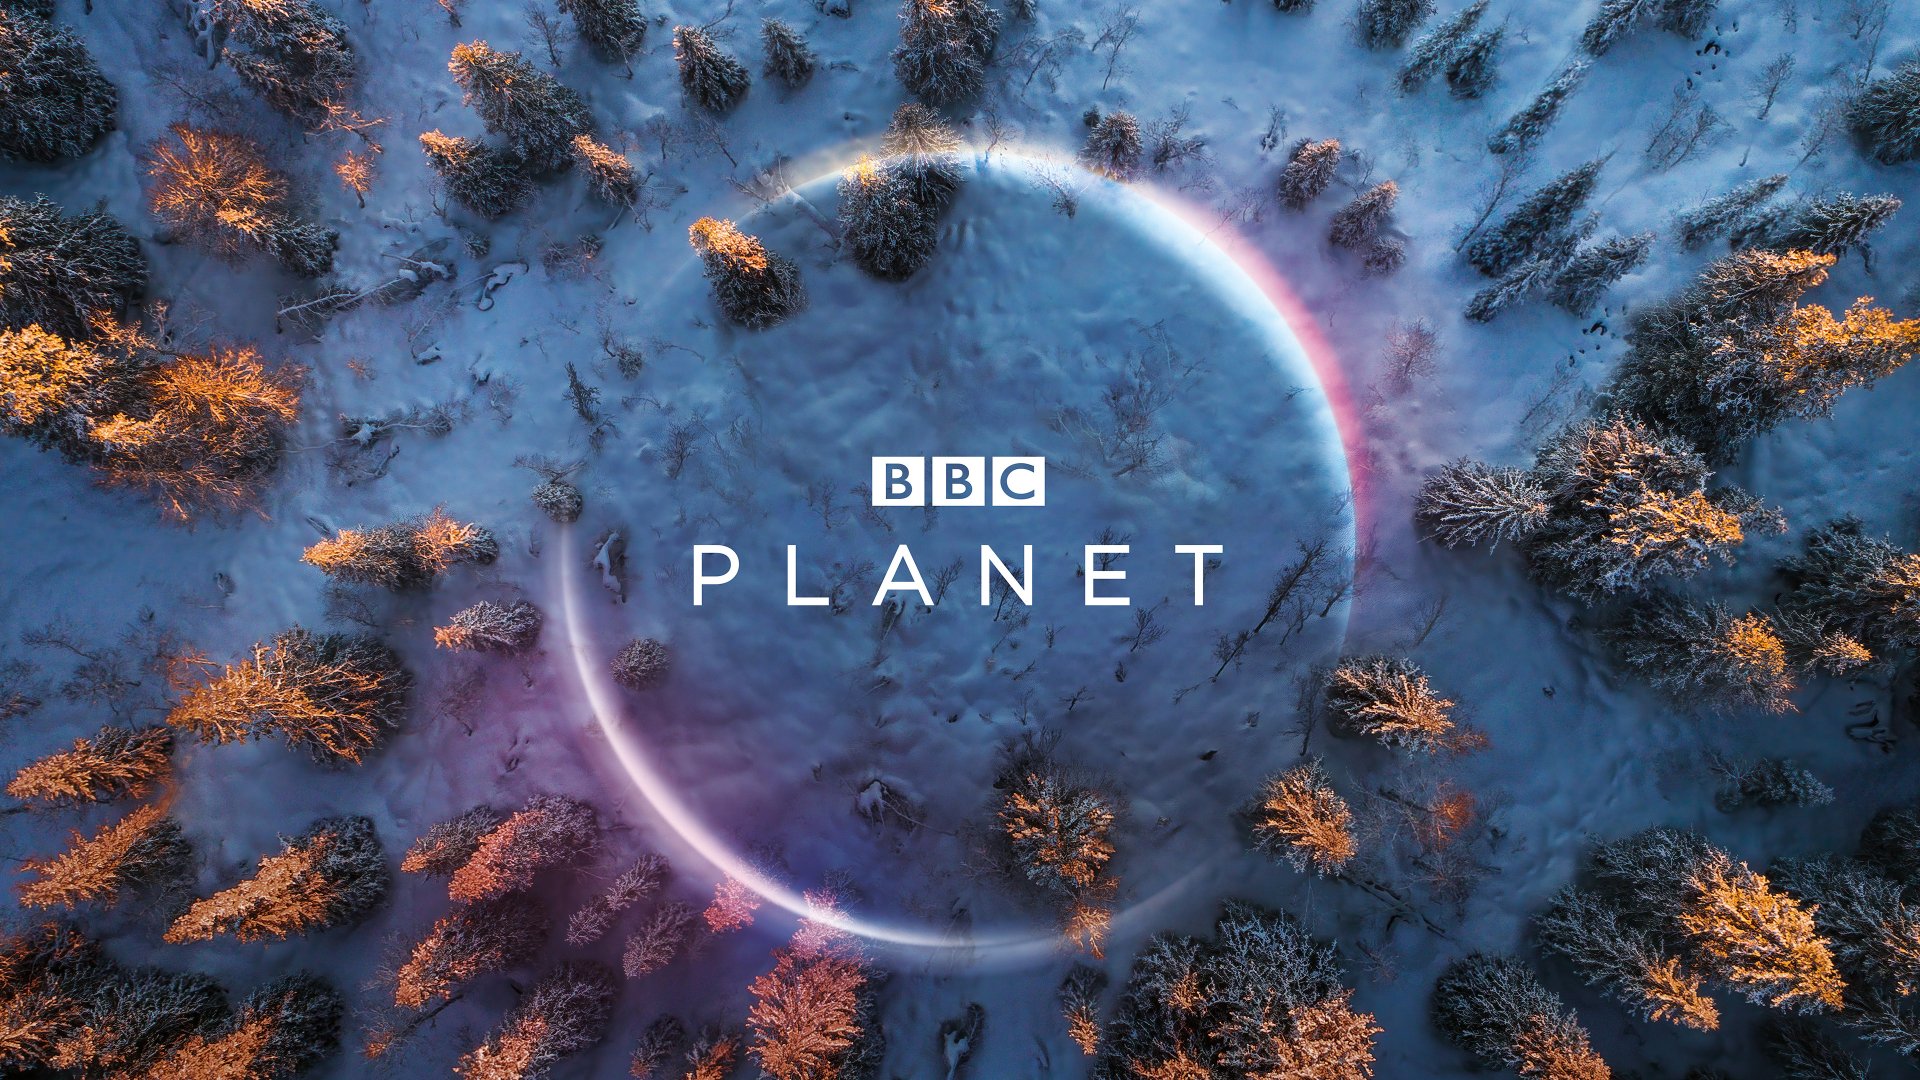 bbc blue planet logo